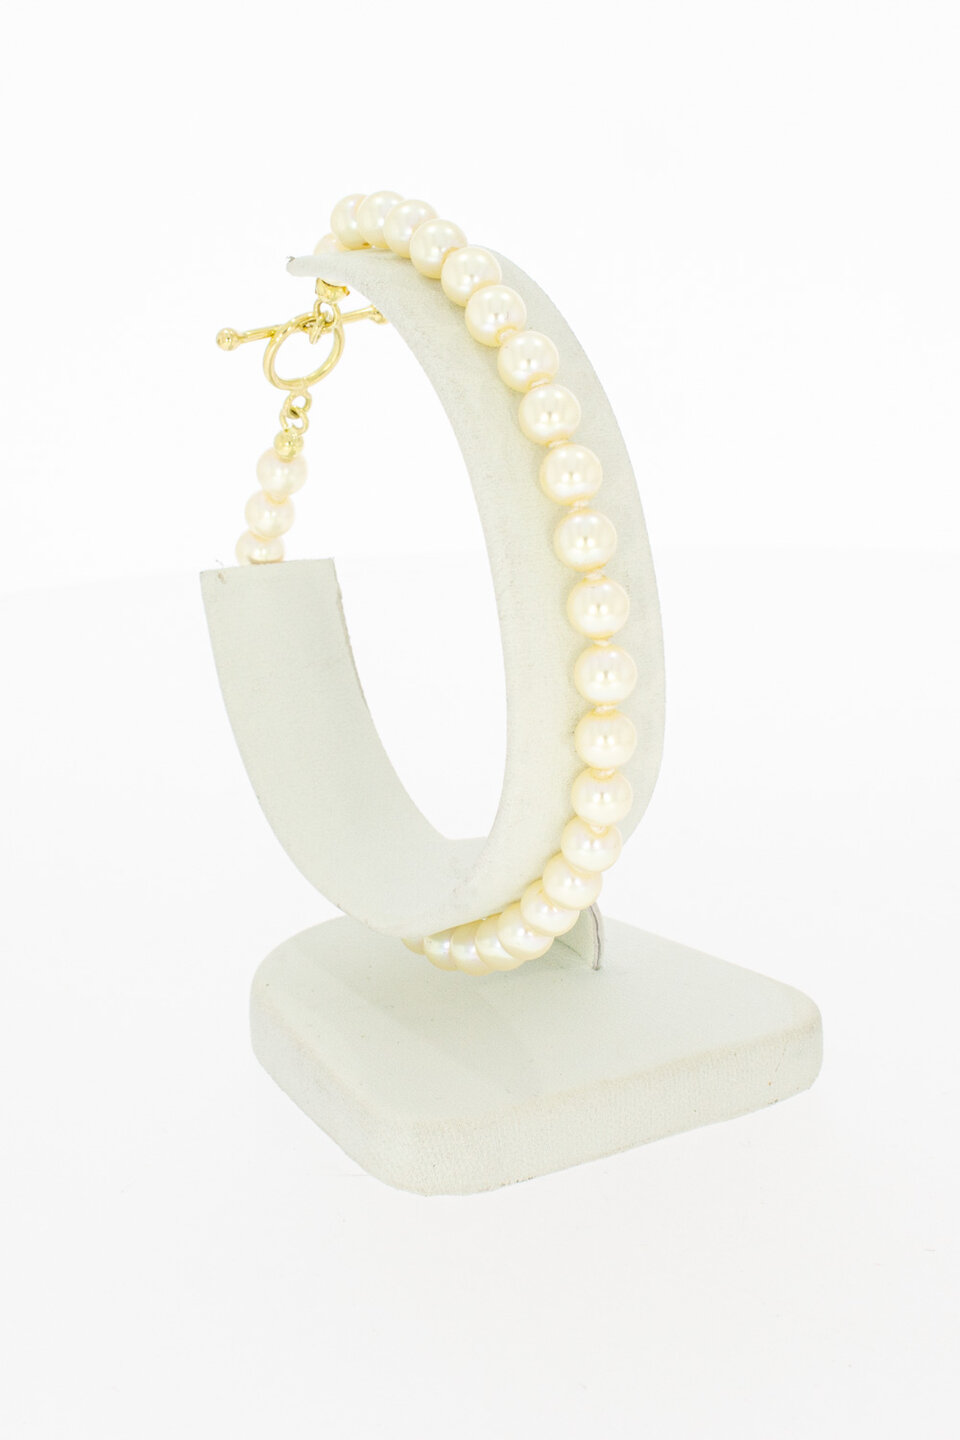 Perlenarmband mit 14 Karat Verschluss - 20,9 cm